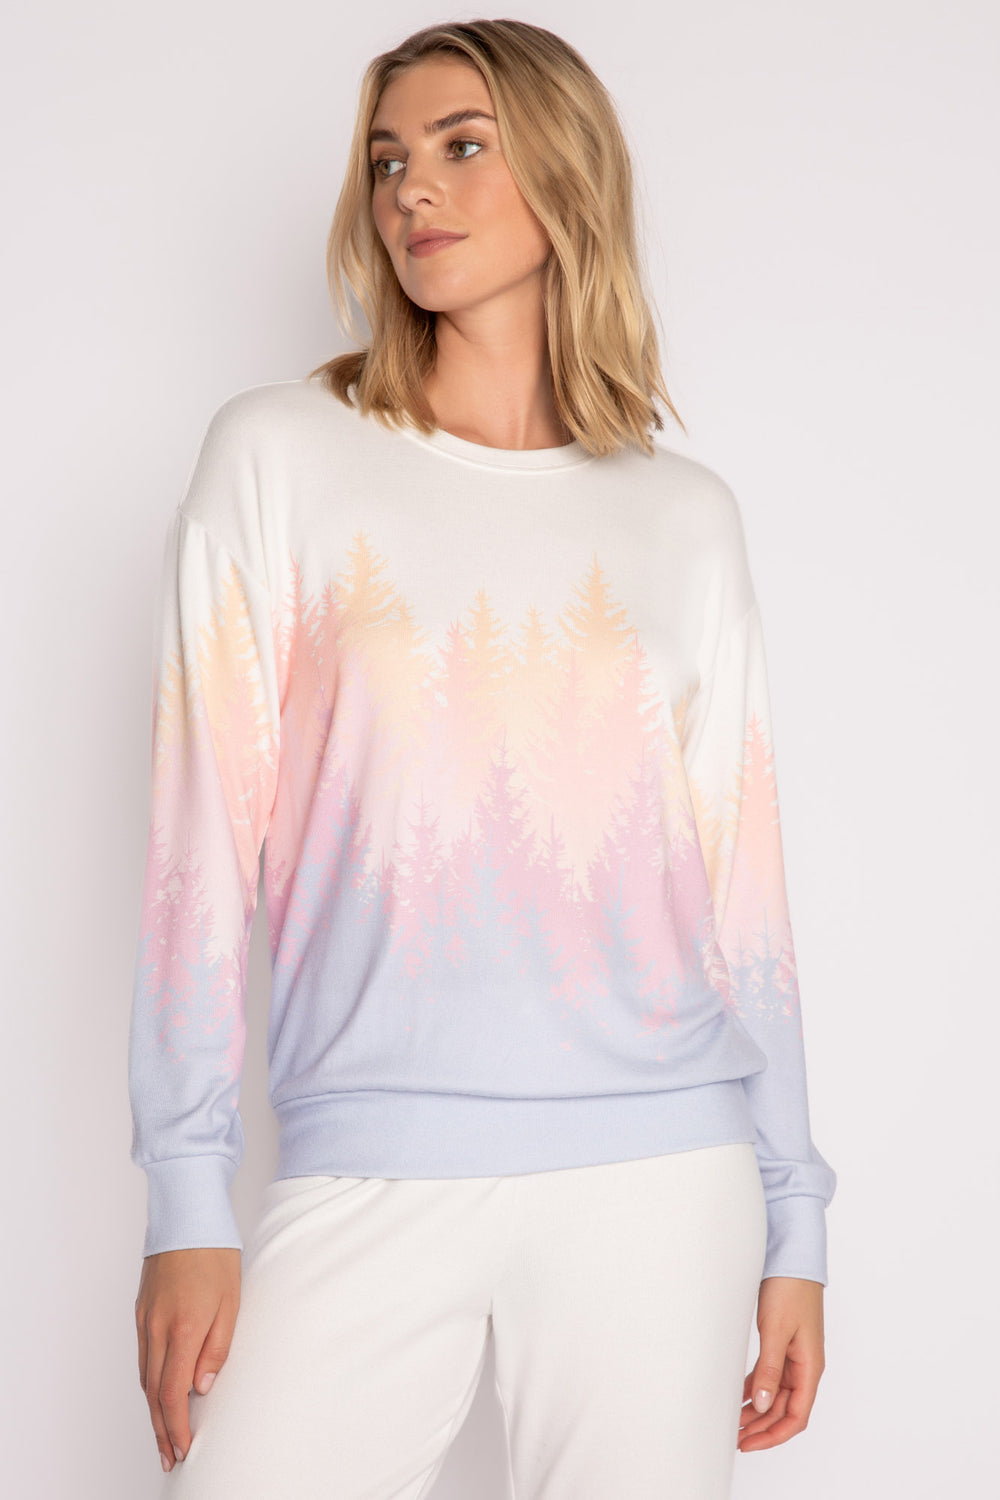 PJ Salvage sweatshirt, Mountain Love fleece